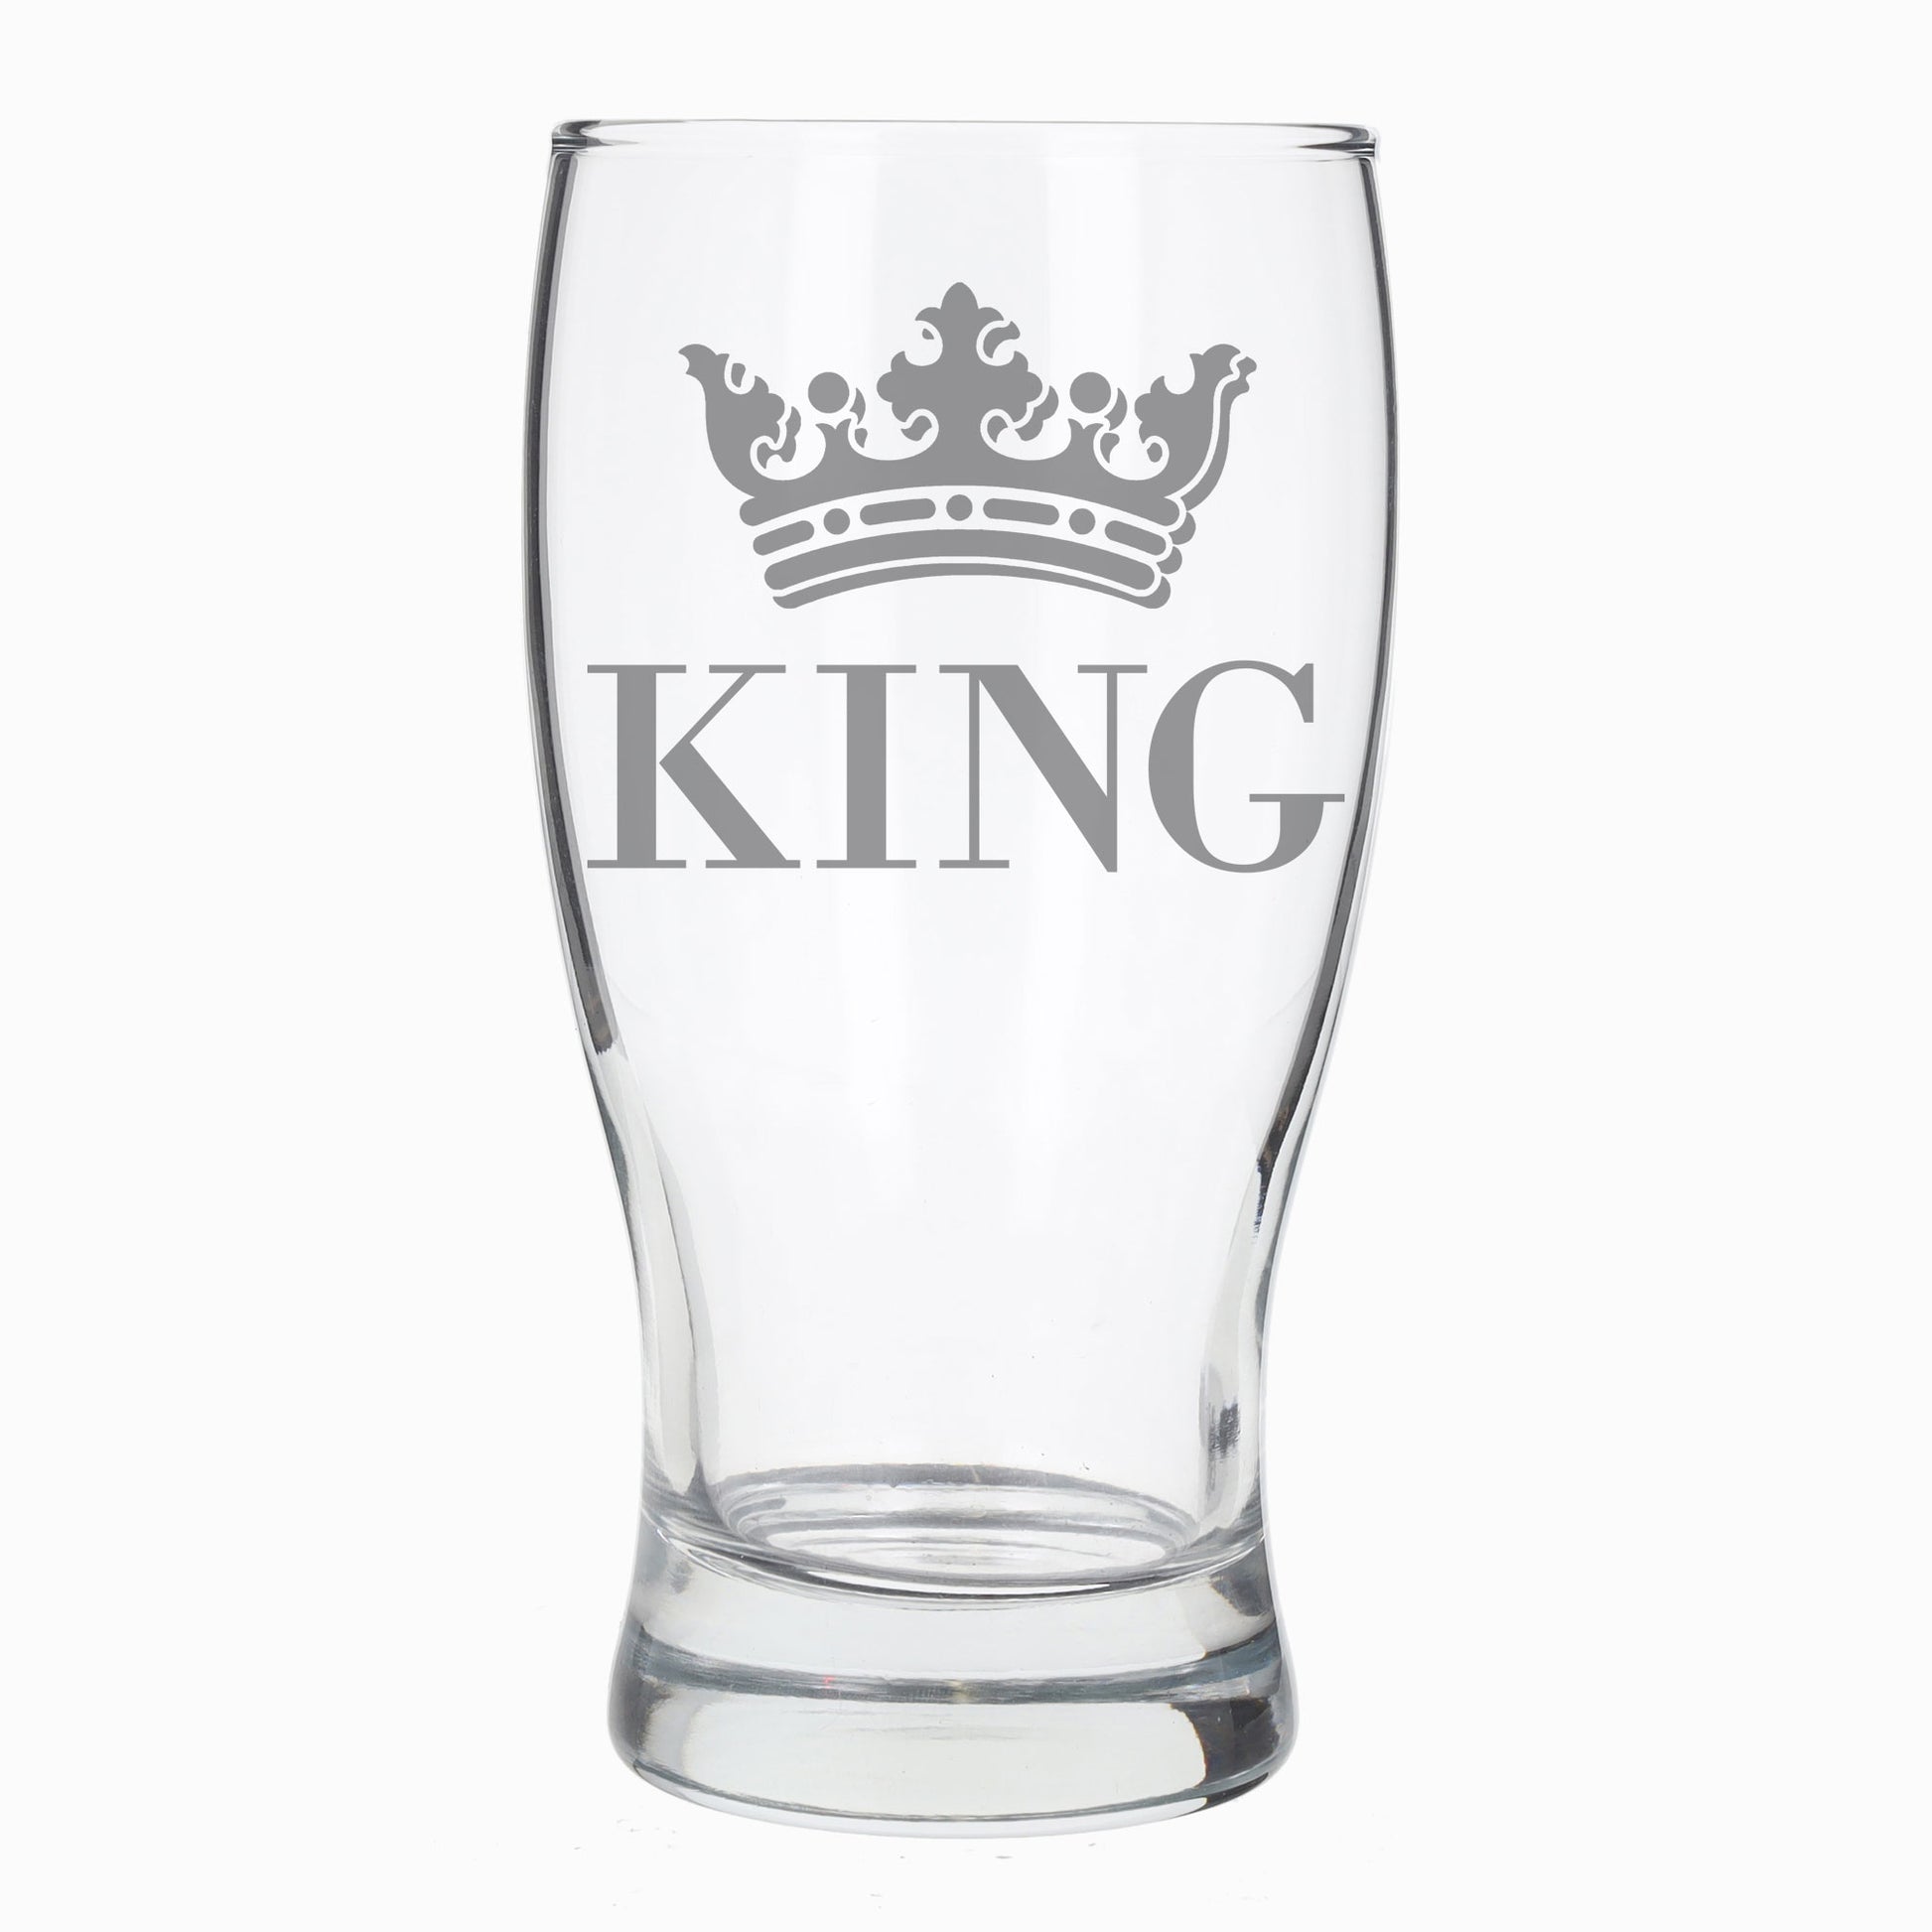 King Engraved Pint Glass  - Always Looking Good -   